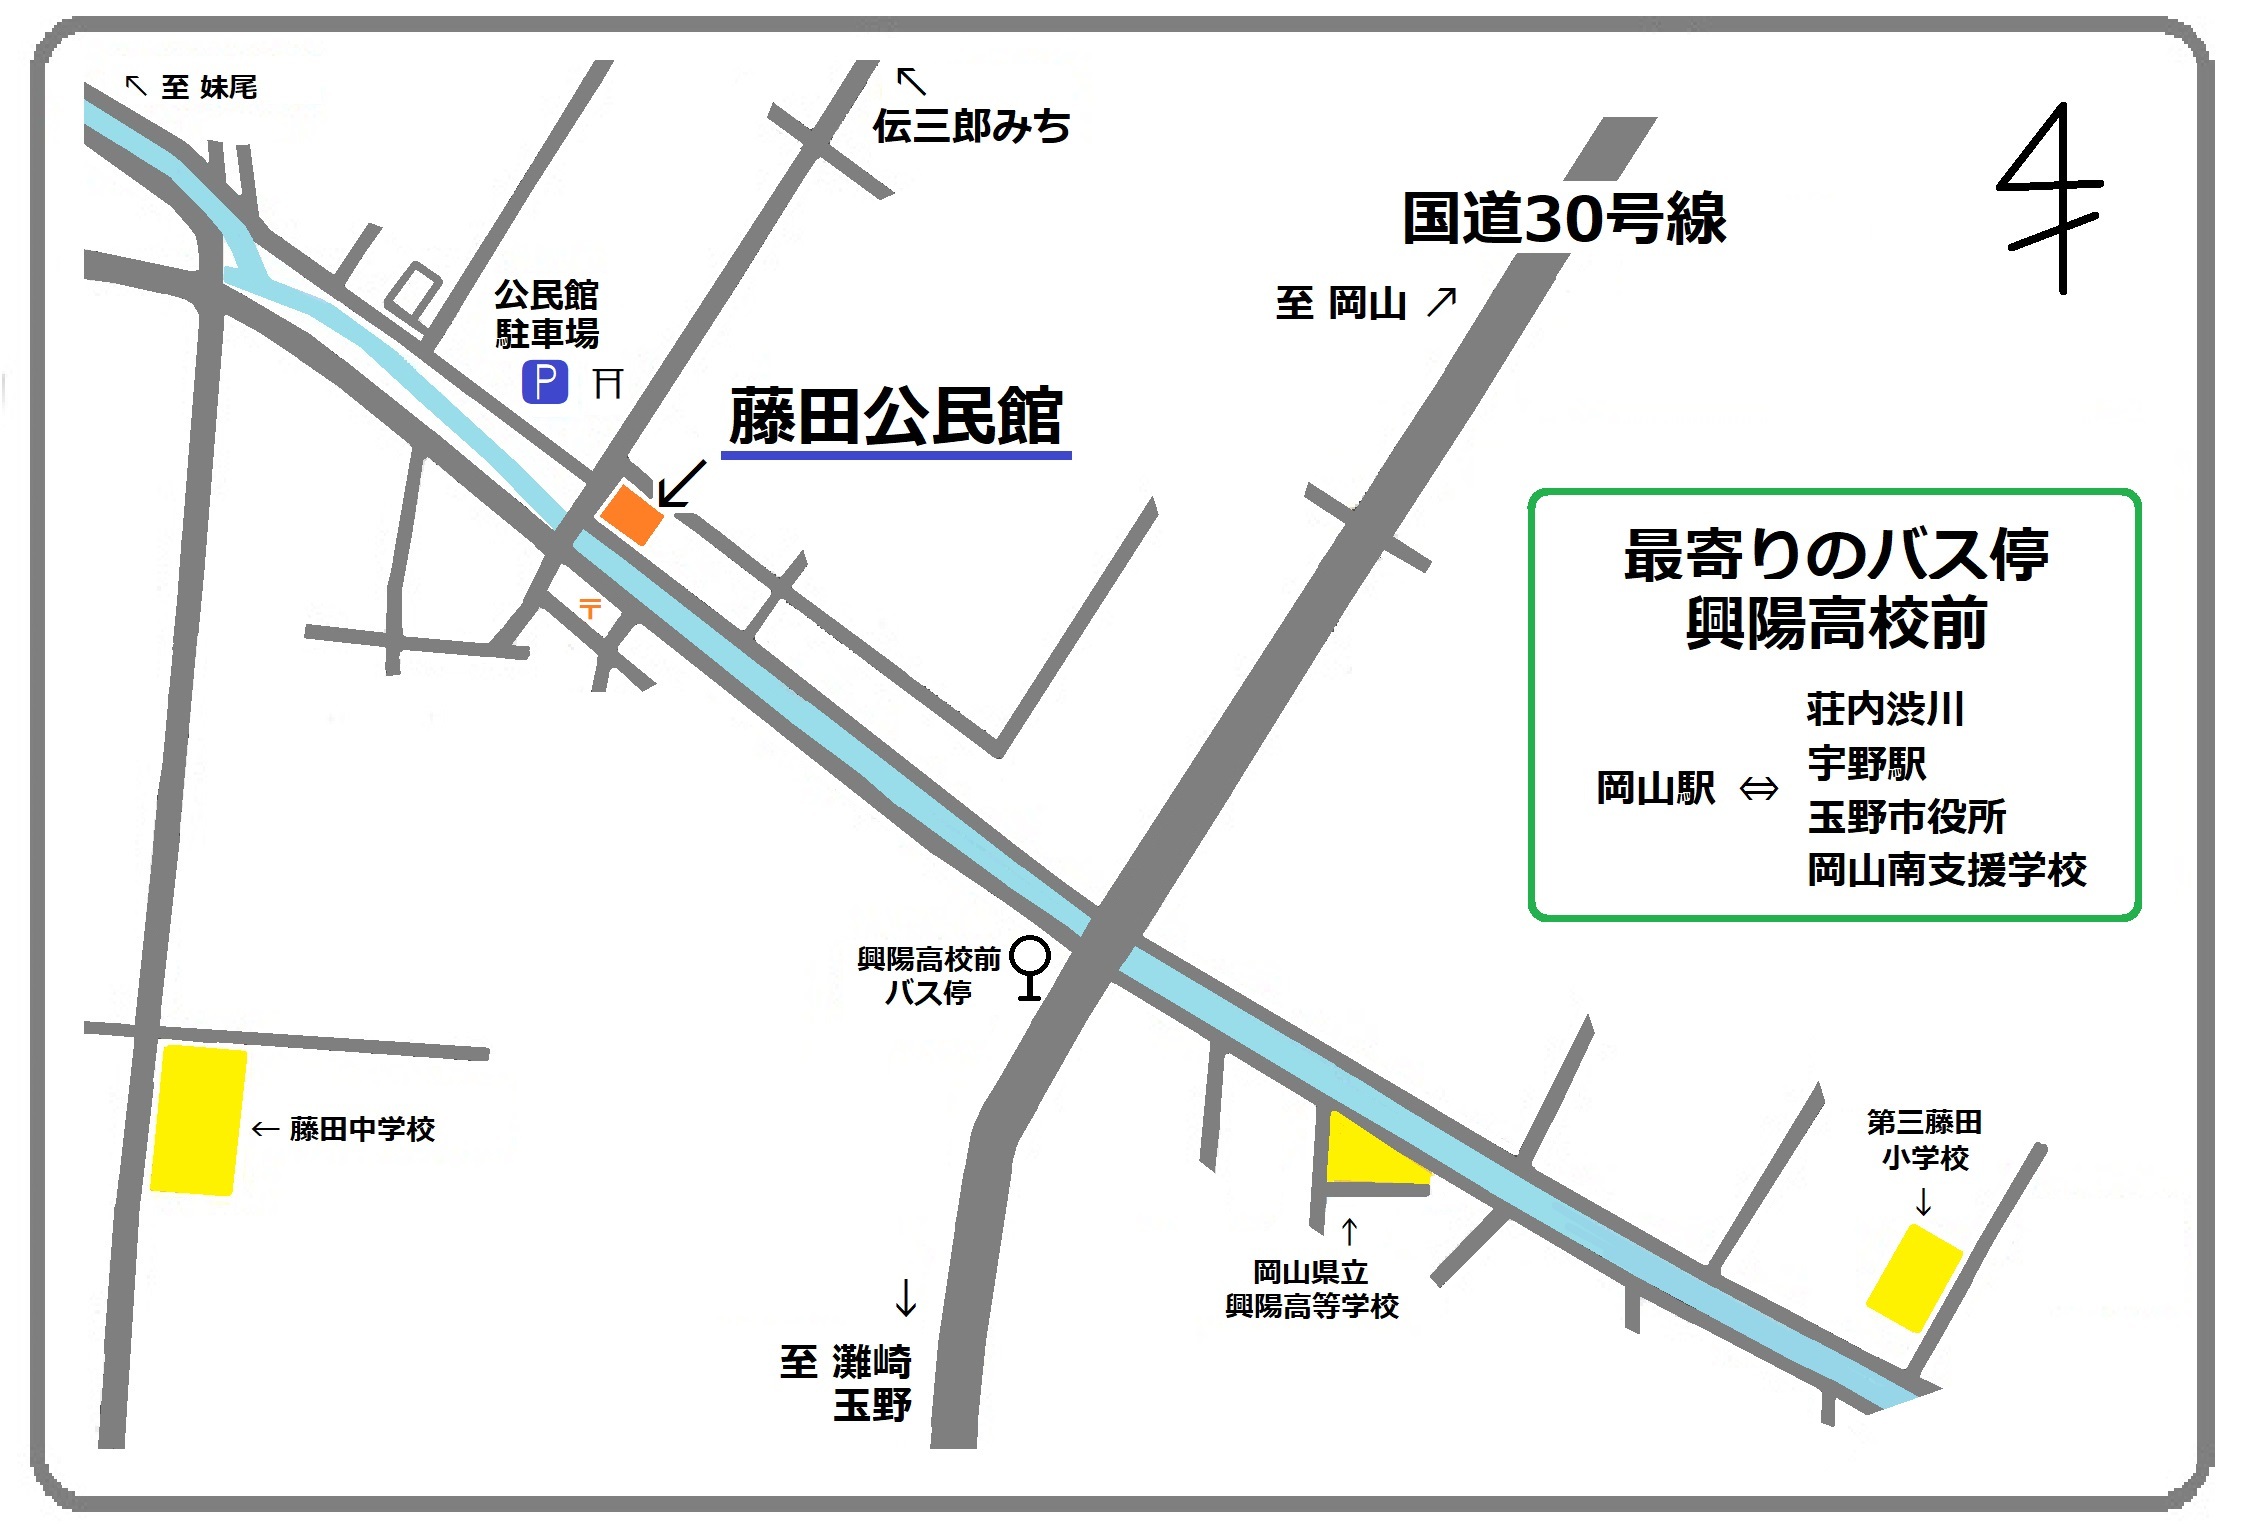 藤田公民館周辺の地図と駐車場案内